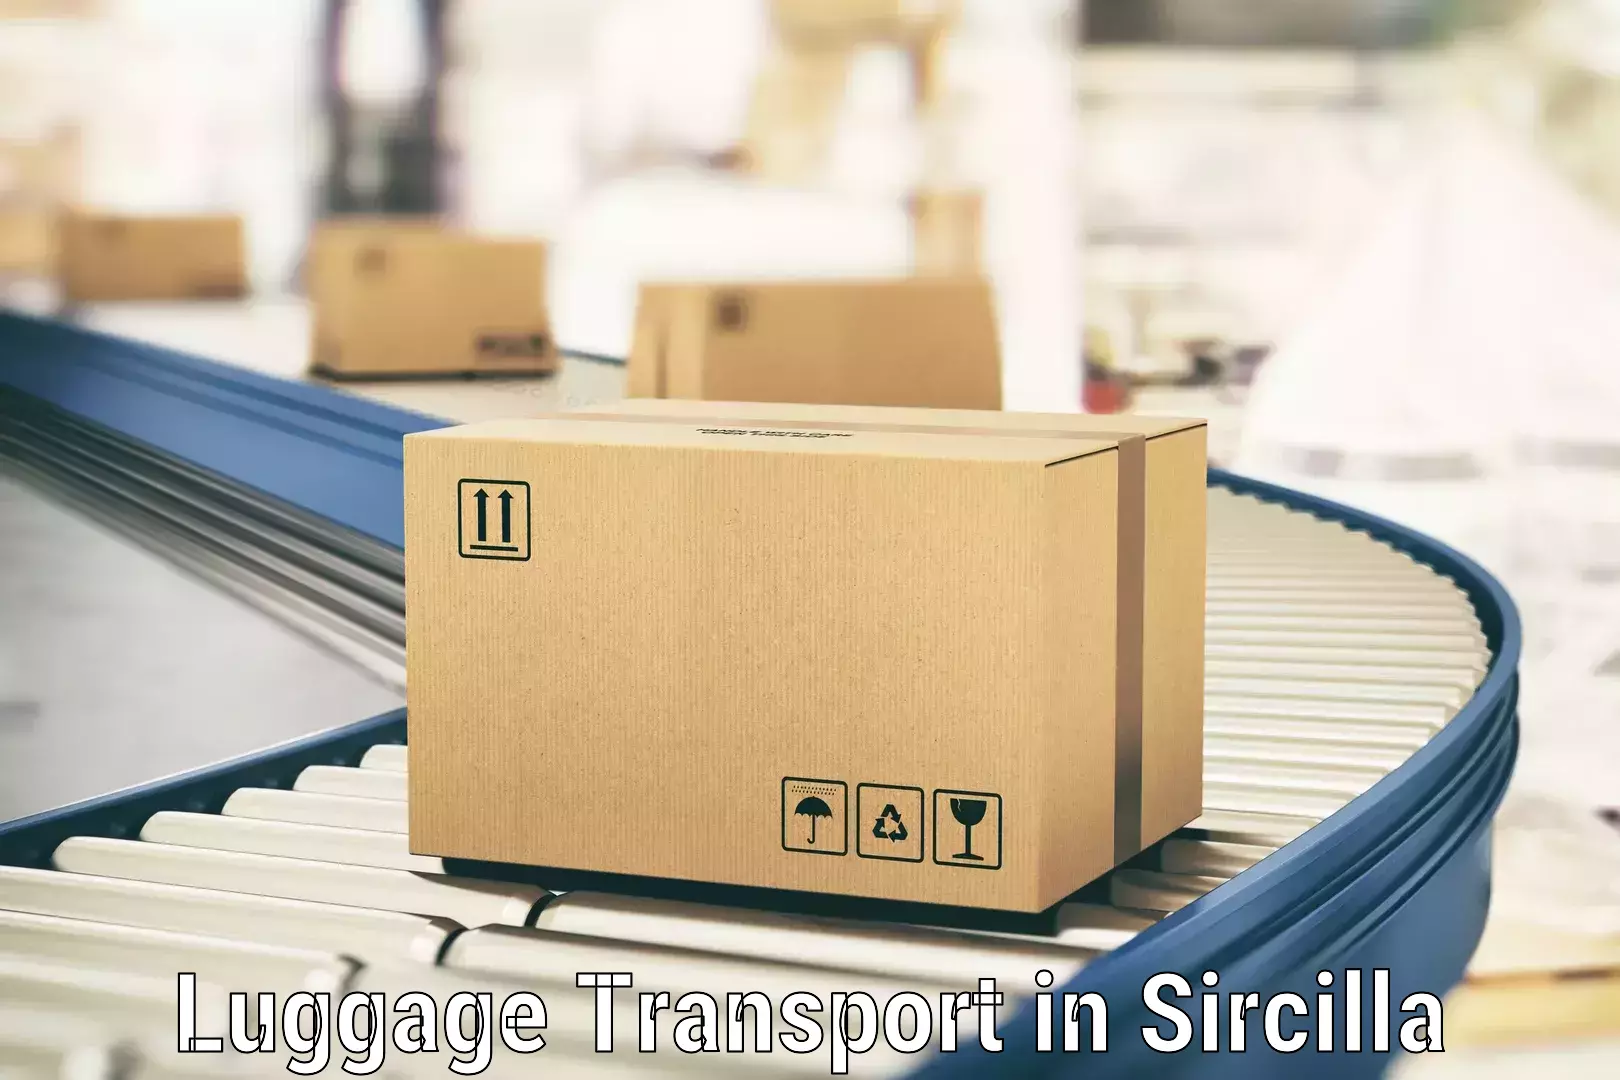 Domestic luggage transport in Sircilla